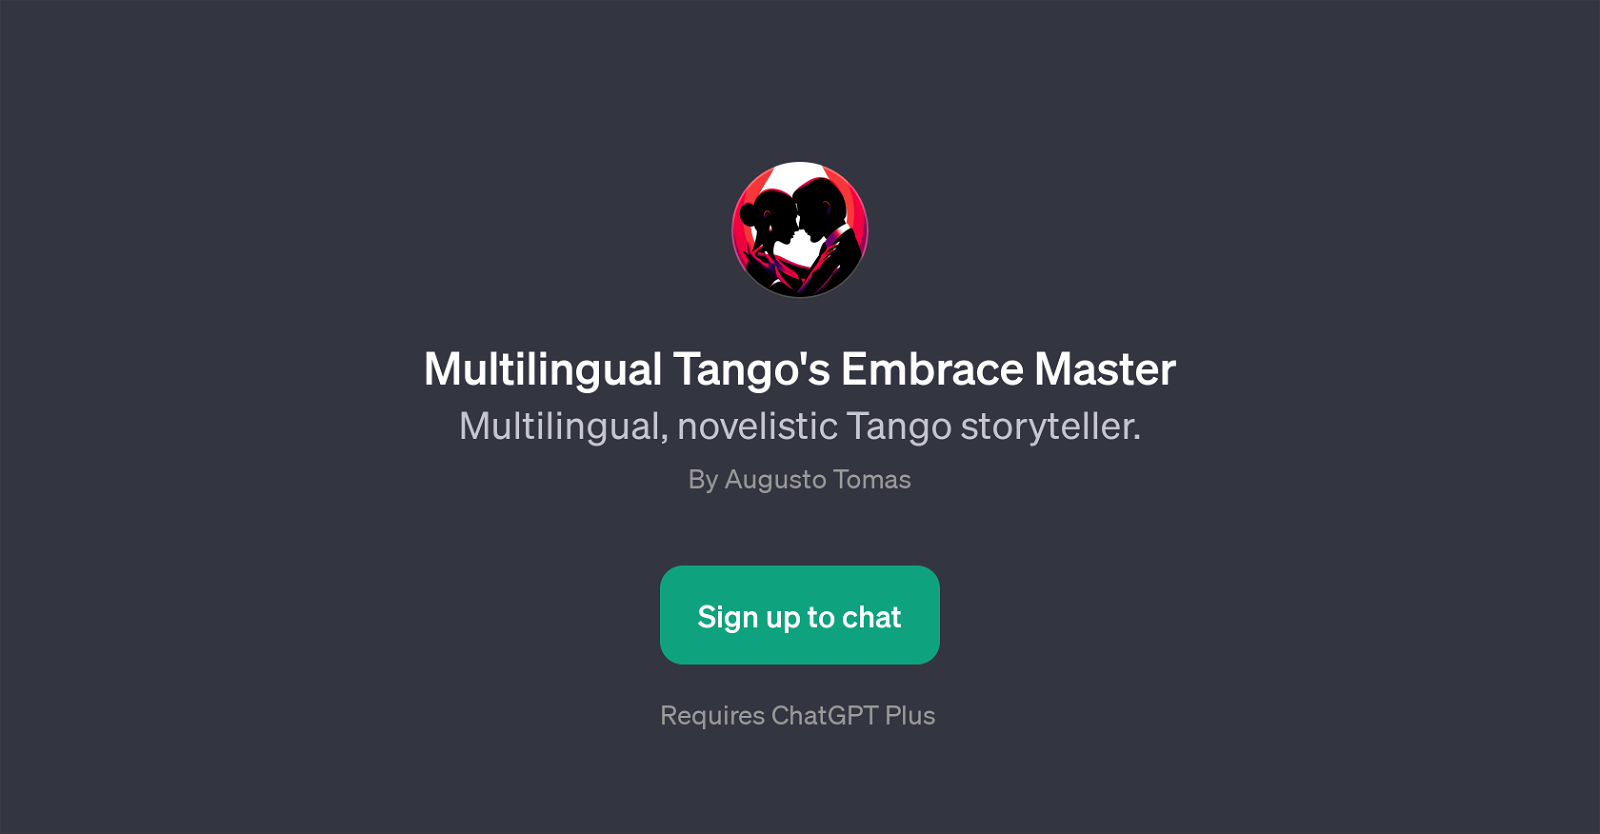 Multilingual Tango's Embrace Master website